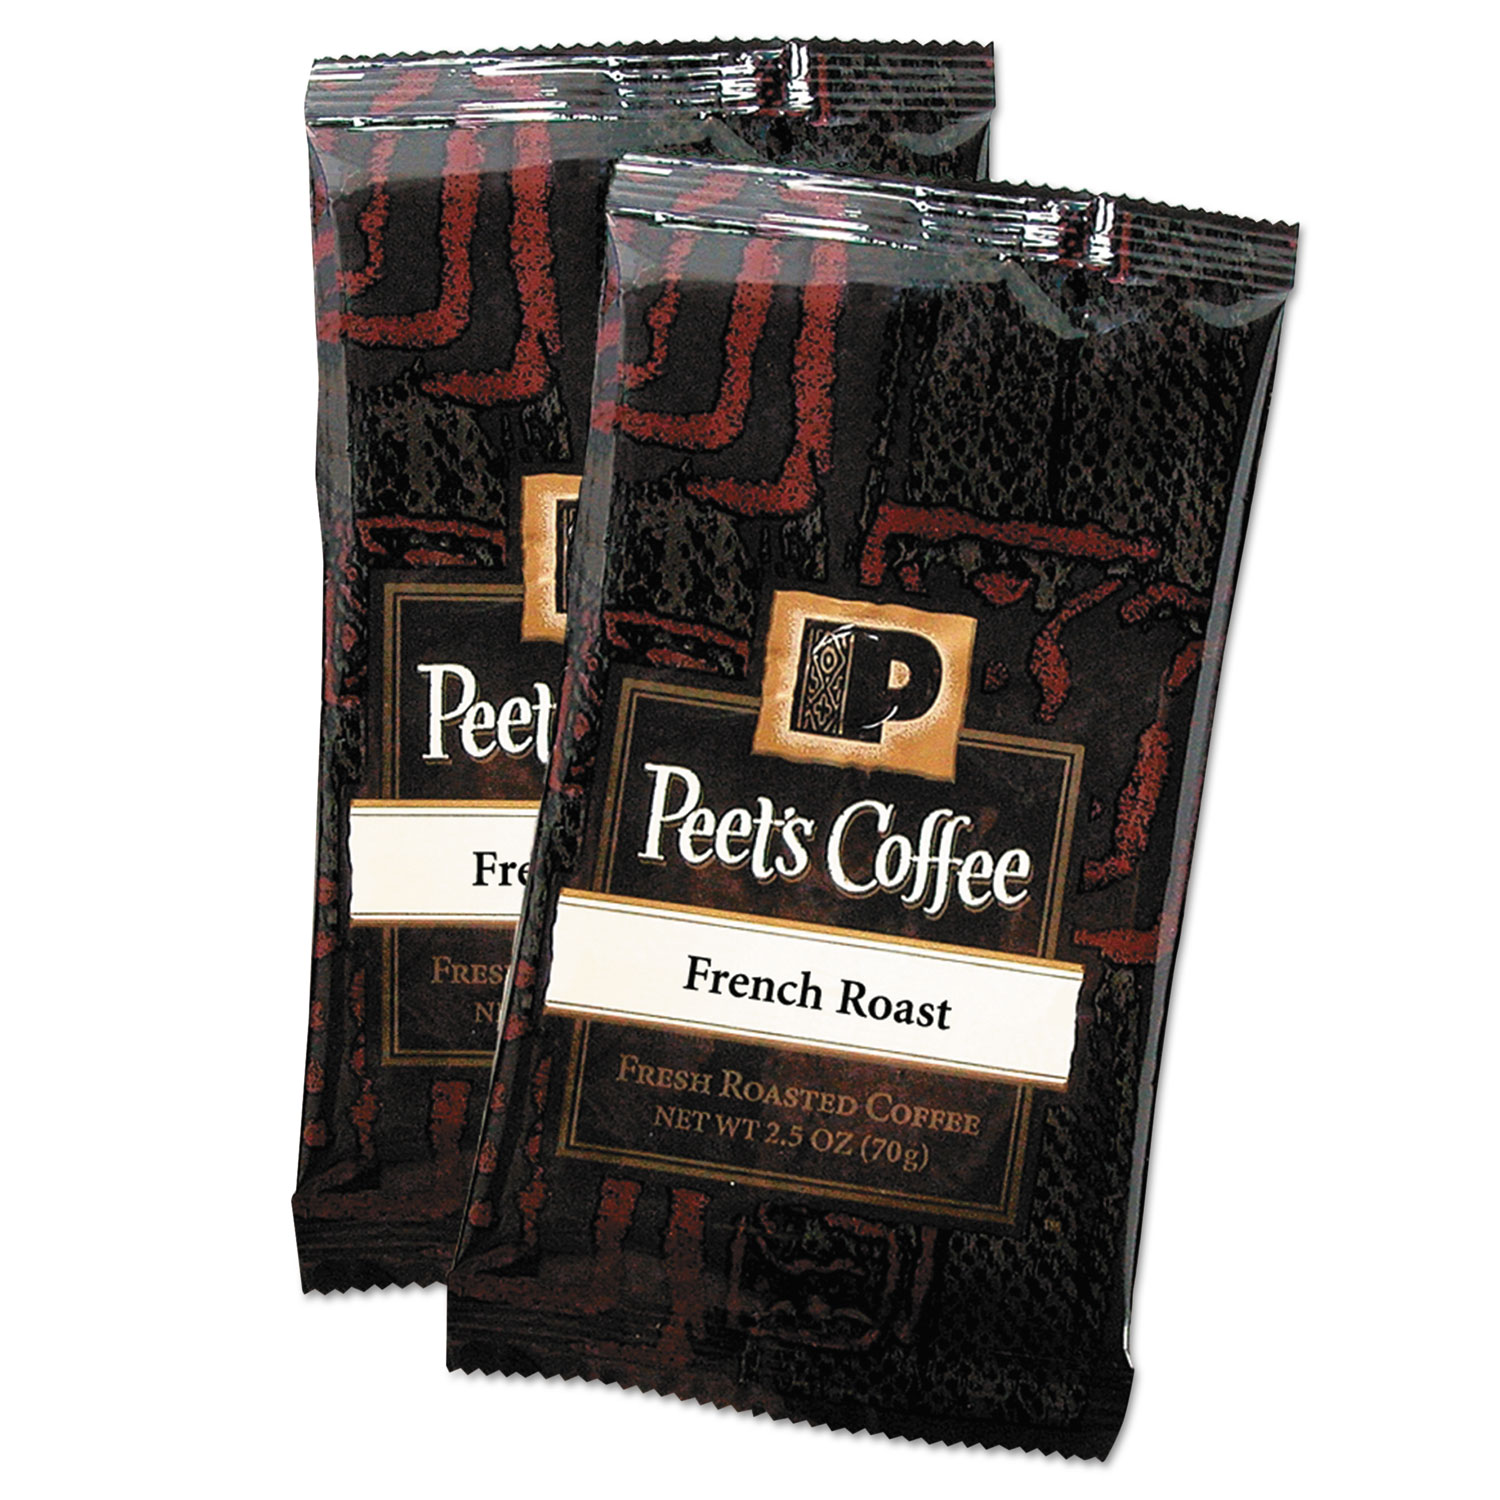  Peet's Coffee & Tea 504914 Coffee Portion Packs, French Roast, 2.5 oz Frack Pack, 18/Box (PEE504914) 